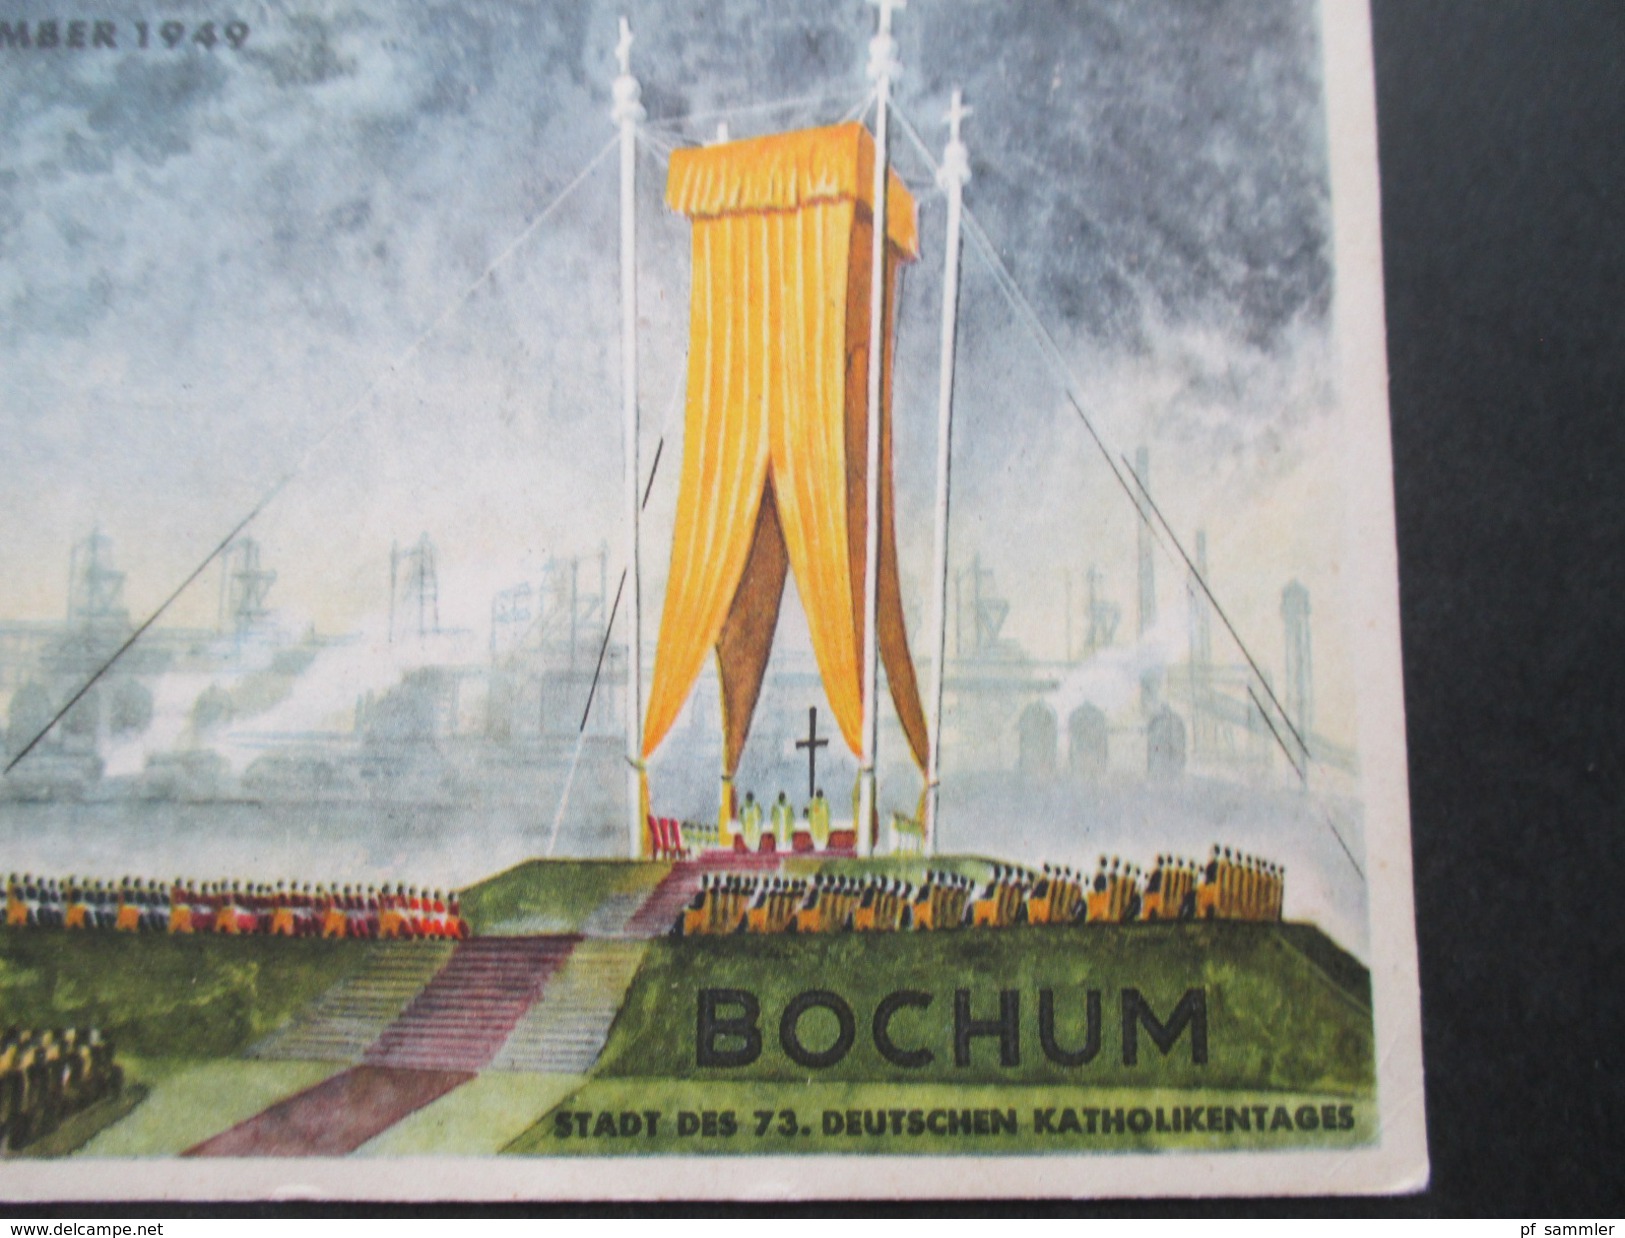 AK / Künstlerkarte Bochum Stadt Des 73. Deutschen Katholikentages. 1. - 4. September. 1949 Aquarell Kurt Hubert Vieth. - Christianity